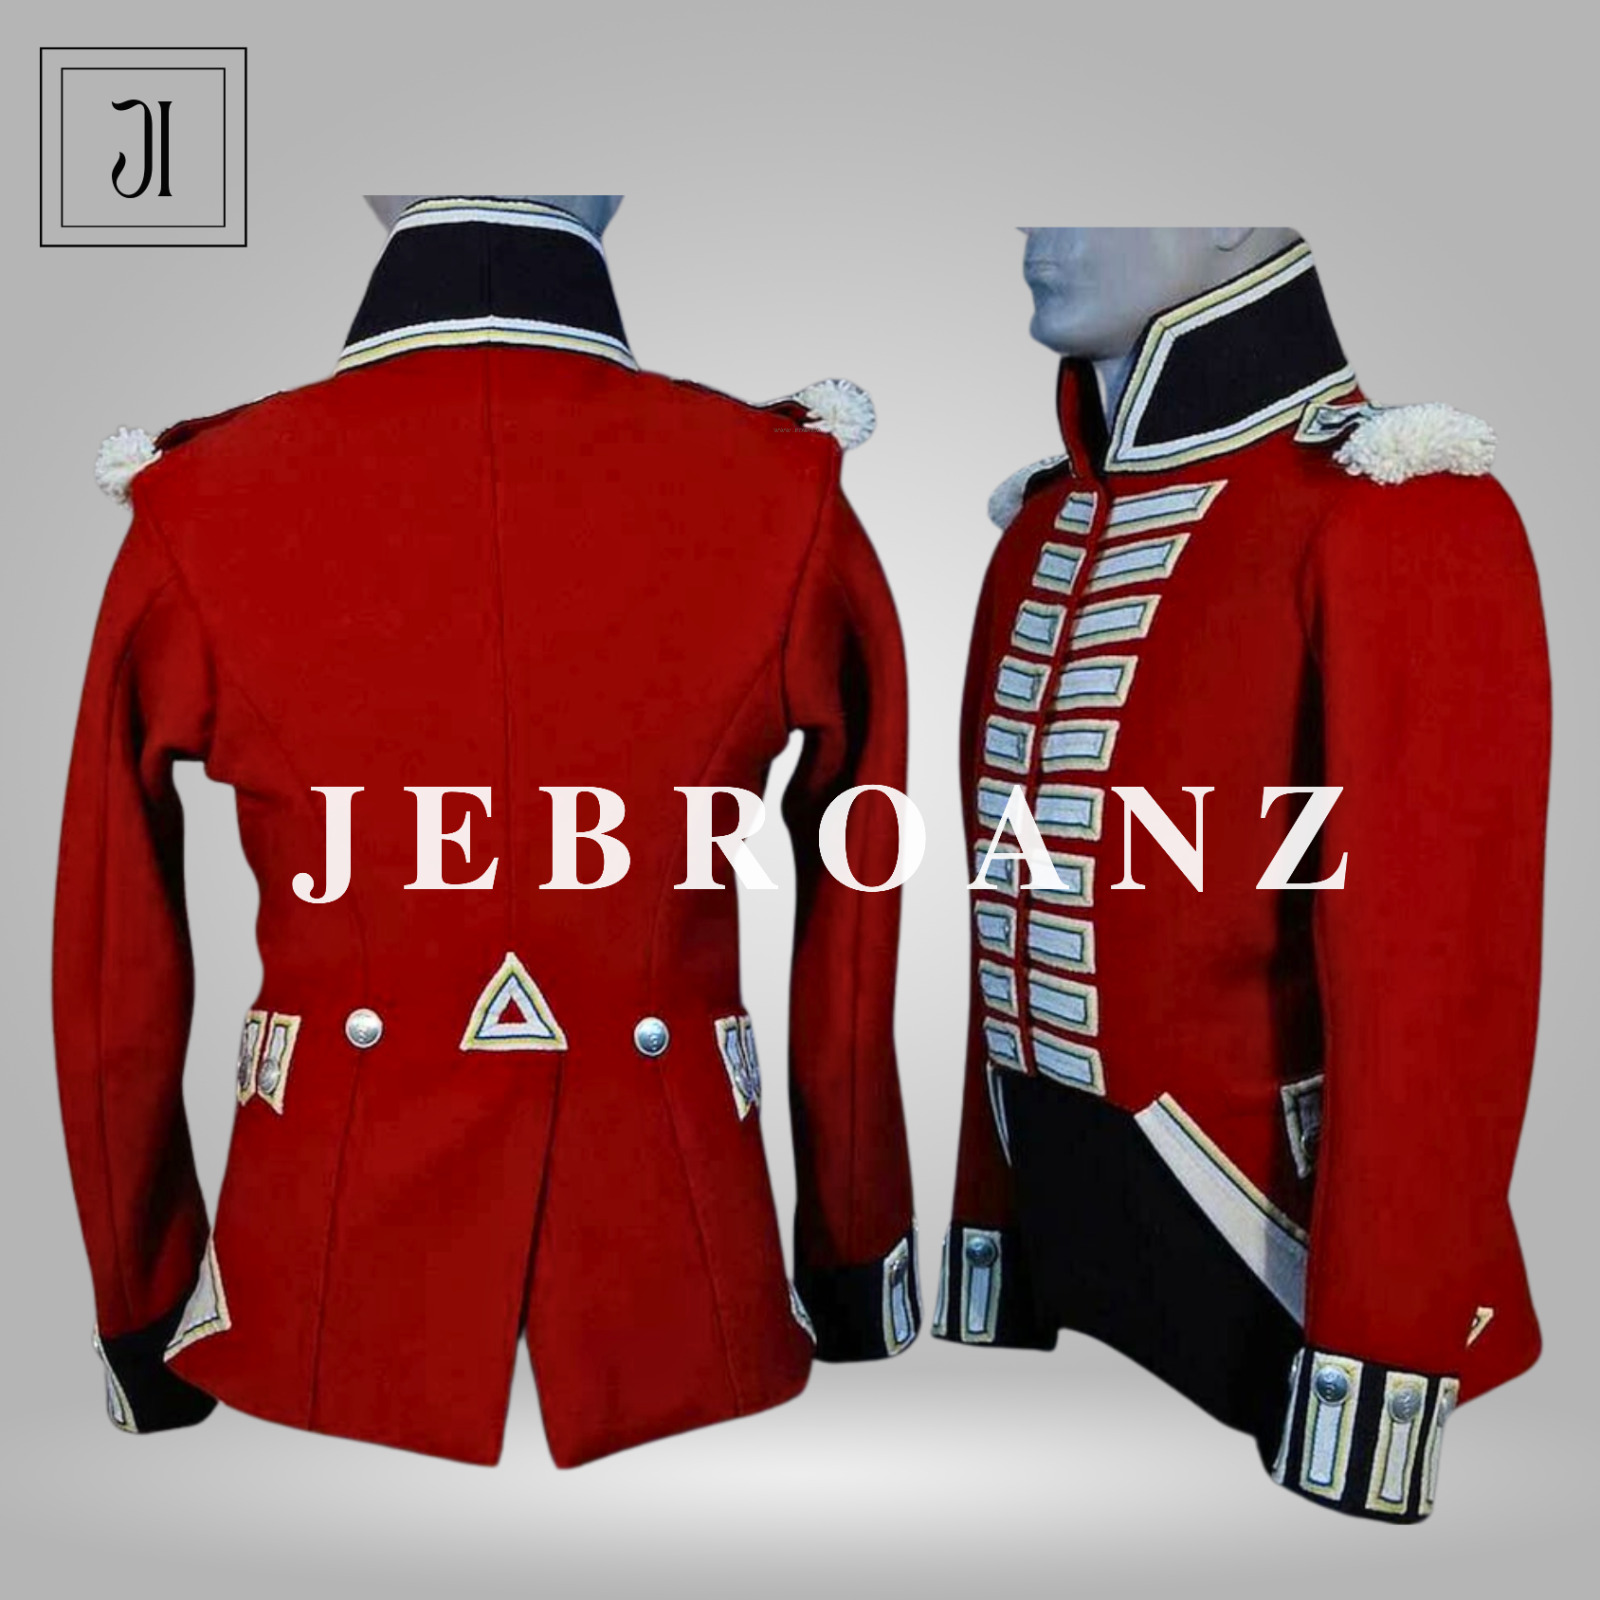 New Mens British Military jacket Officer uniform 8th Regiment - Captain uniform